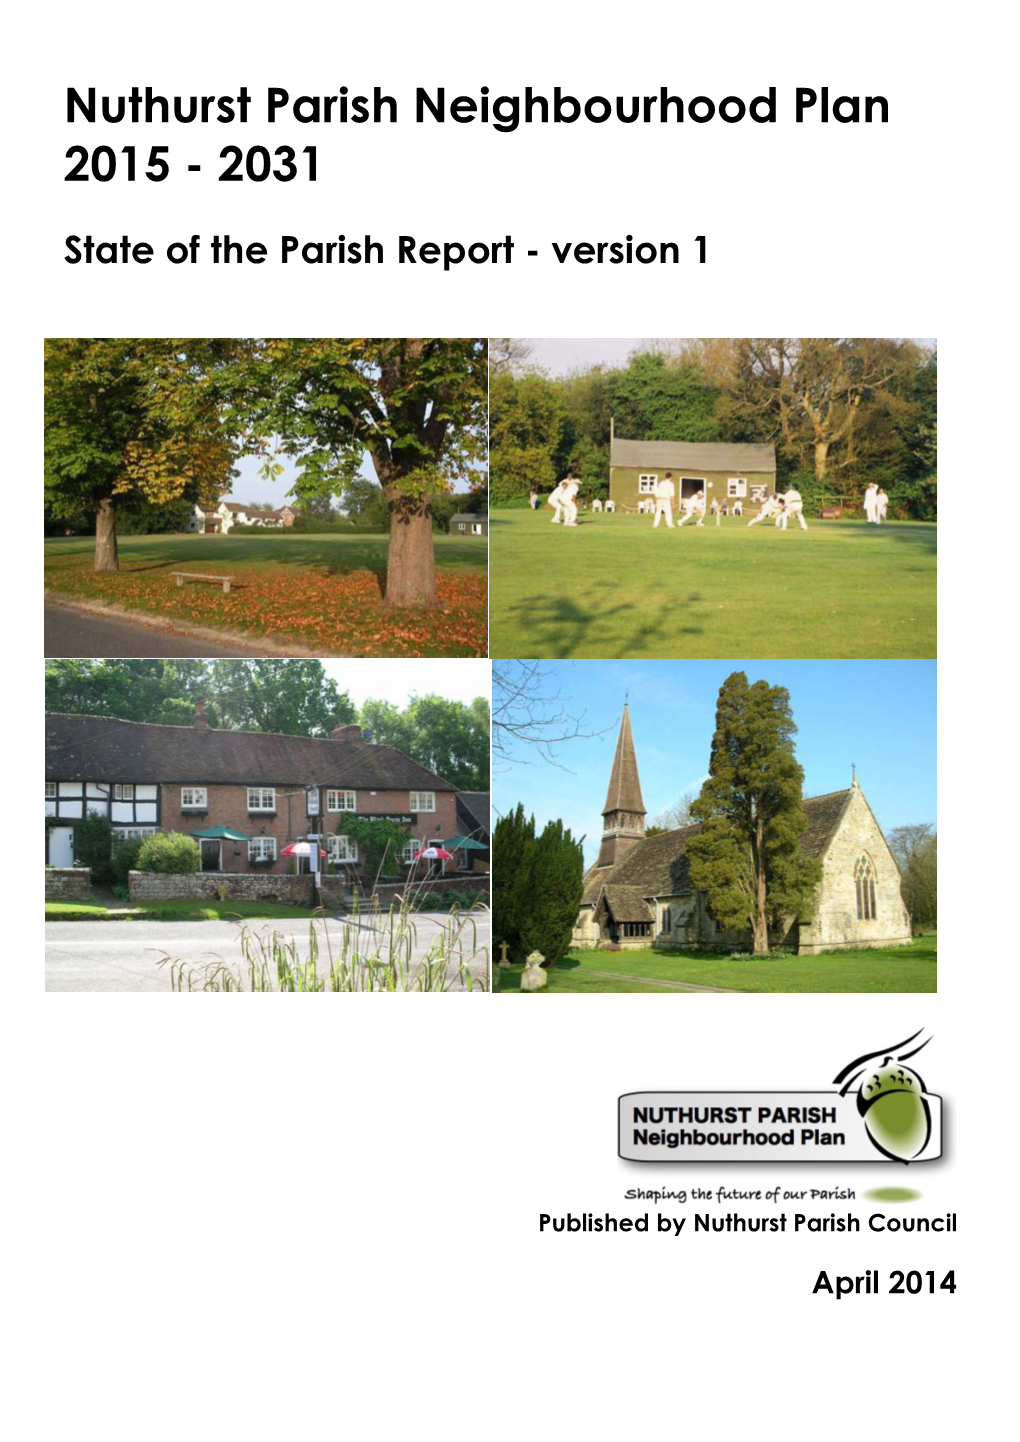 Nuthurst Neighbourhood Plan: State of the Parish Report